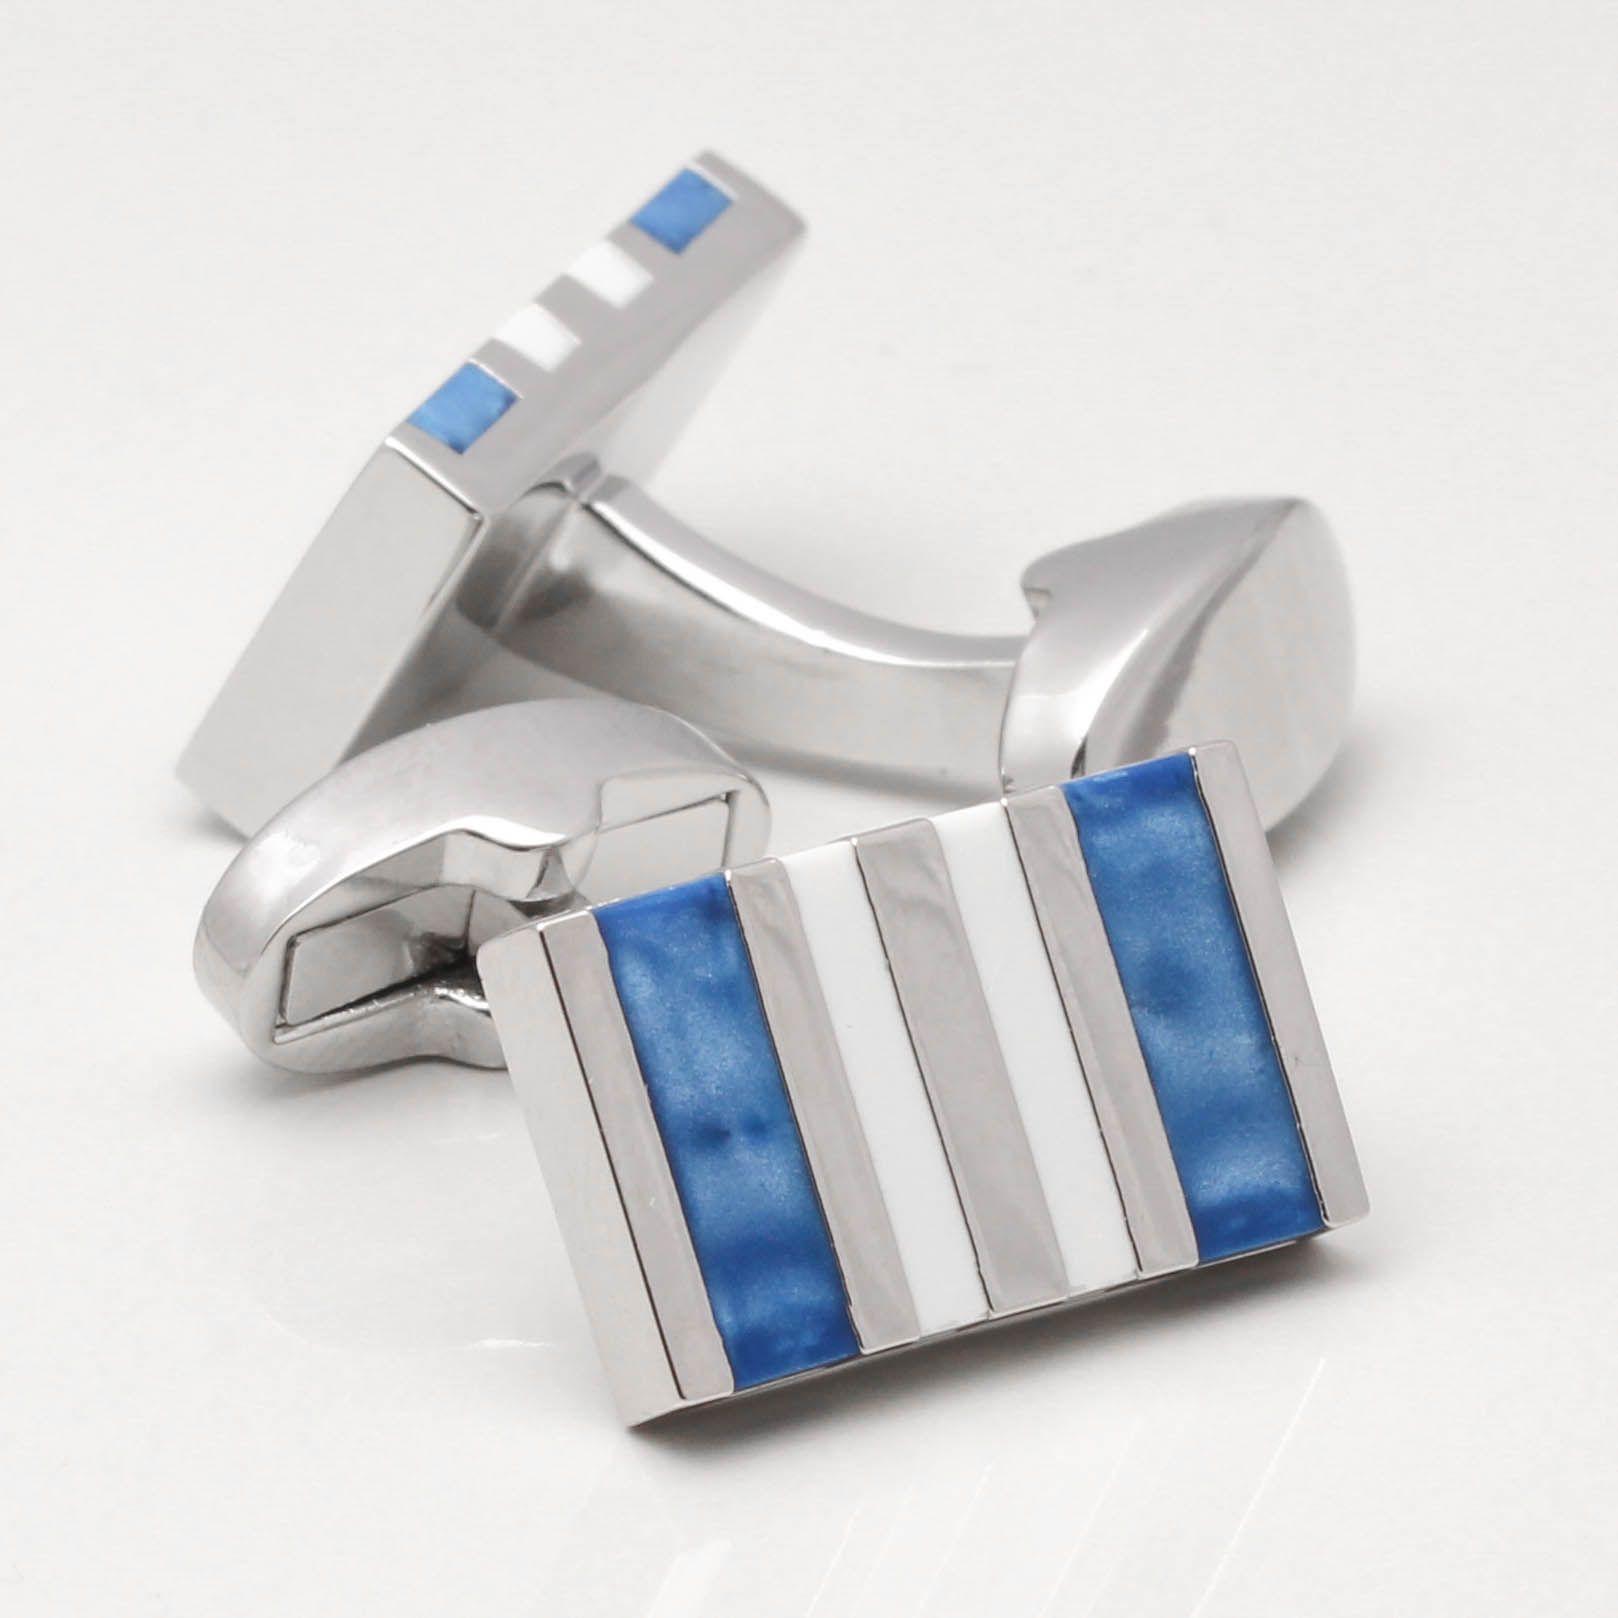 Rectangular Blue and White Logo - Blue & White Rectangular Cufflinks by Badger & Brown. Free P&P